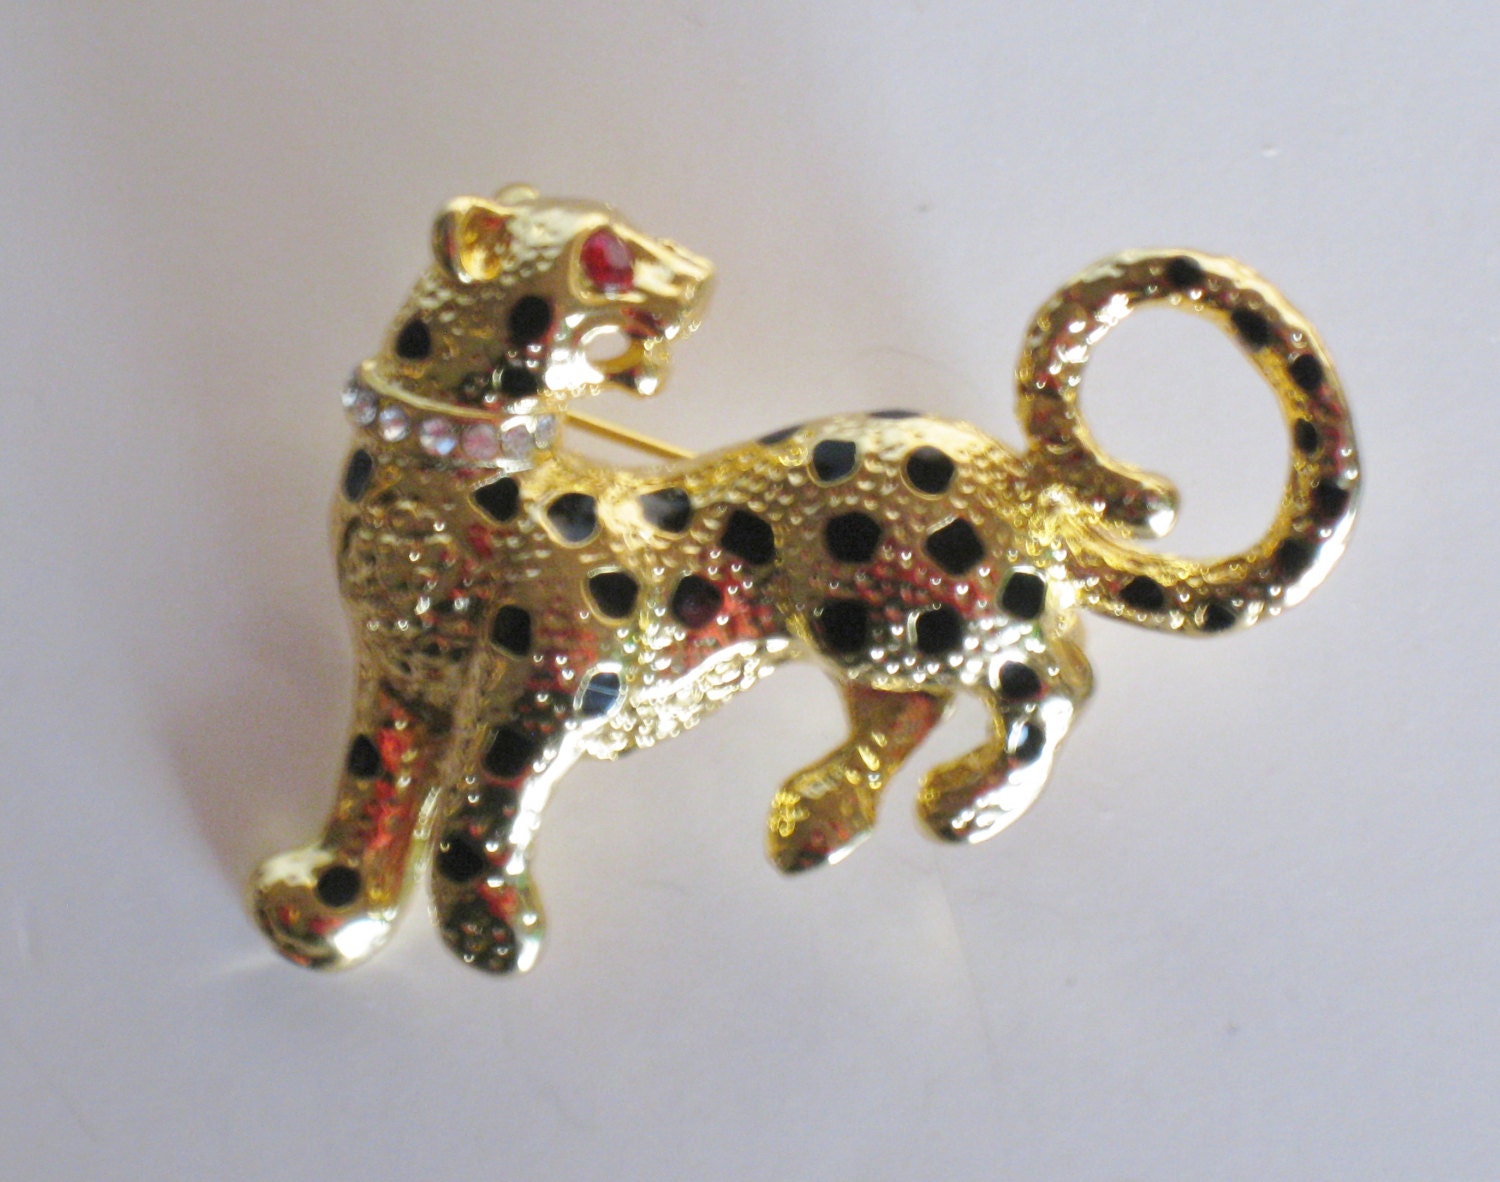 Vintage Cheetah Pin. Sale, price reduced. Gold, Rhinestone and Enamel Lapel Pin circa 1990. Vintage Animal Jewelry. - mainevintagetreasure